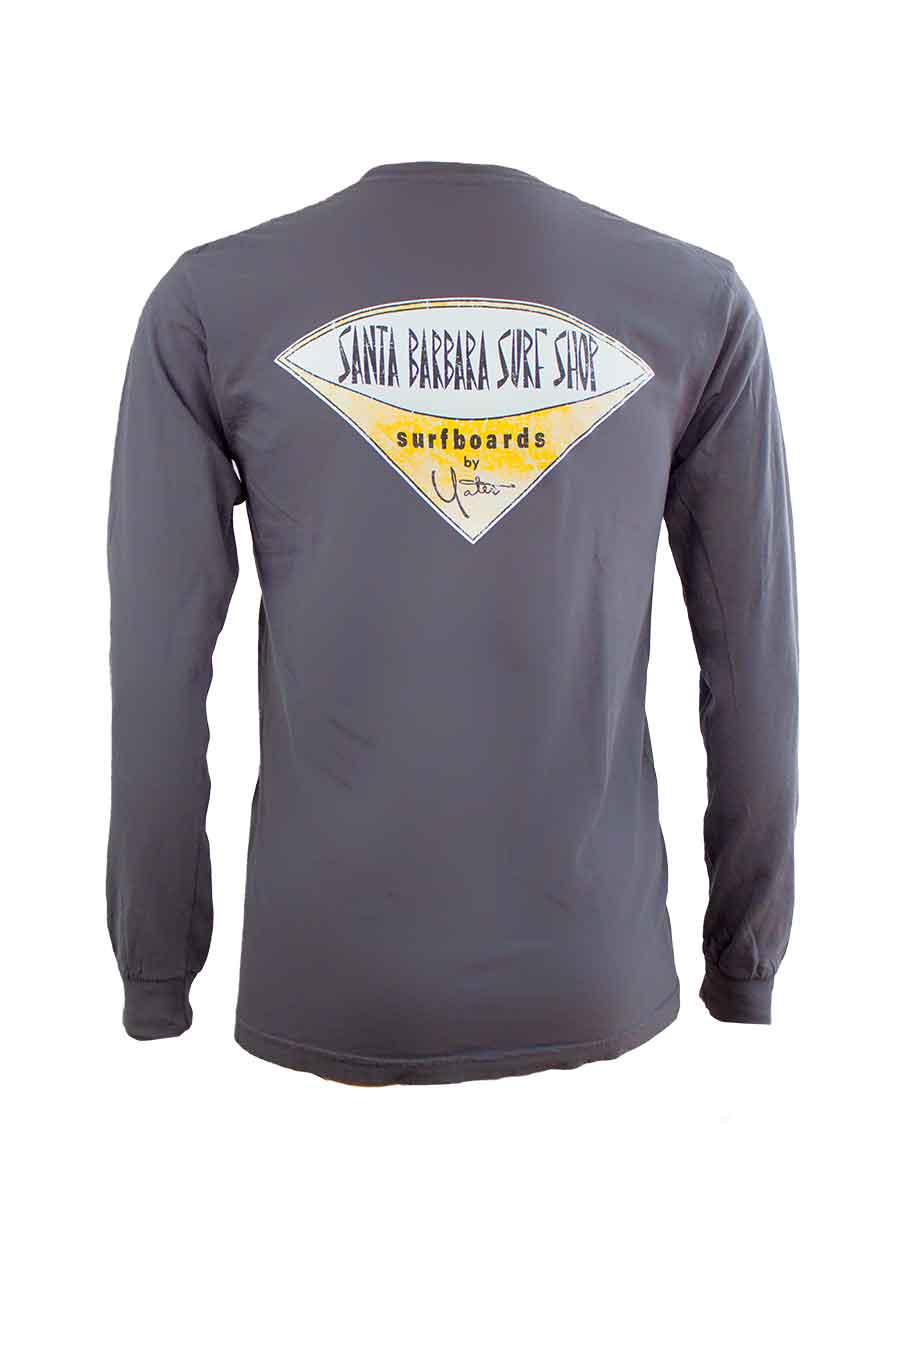 Premium Long Sleeve T-Shirt Distressed Santa Barbara Surf Shop Logo - Surf N' Wear Beach House Online